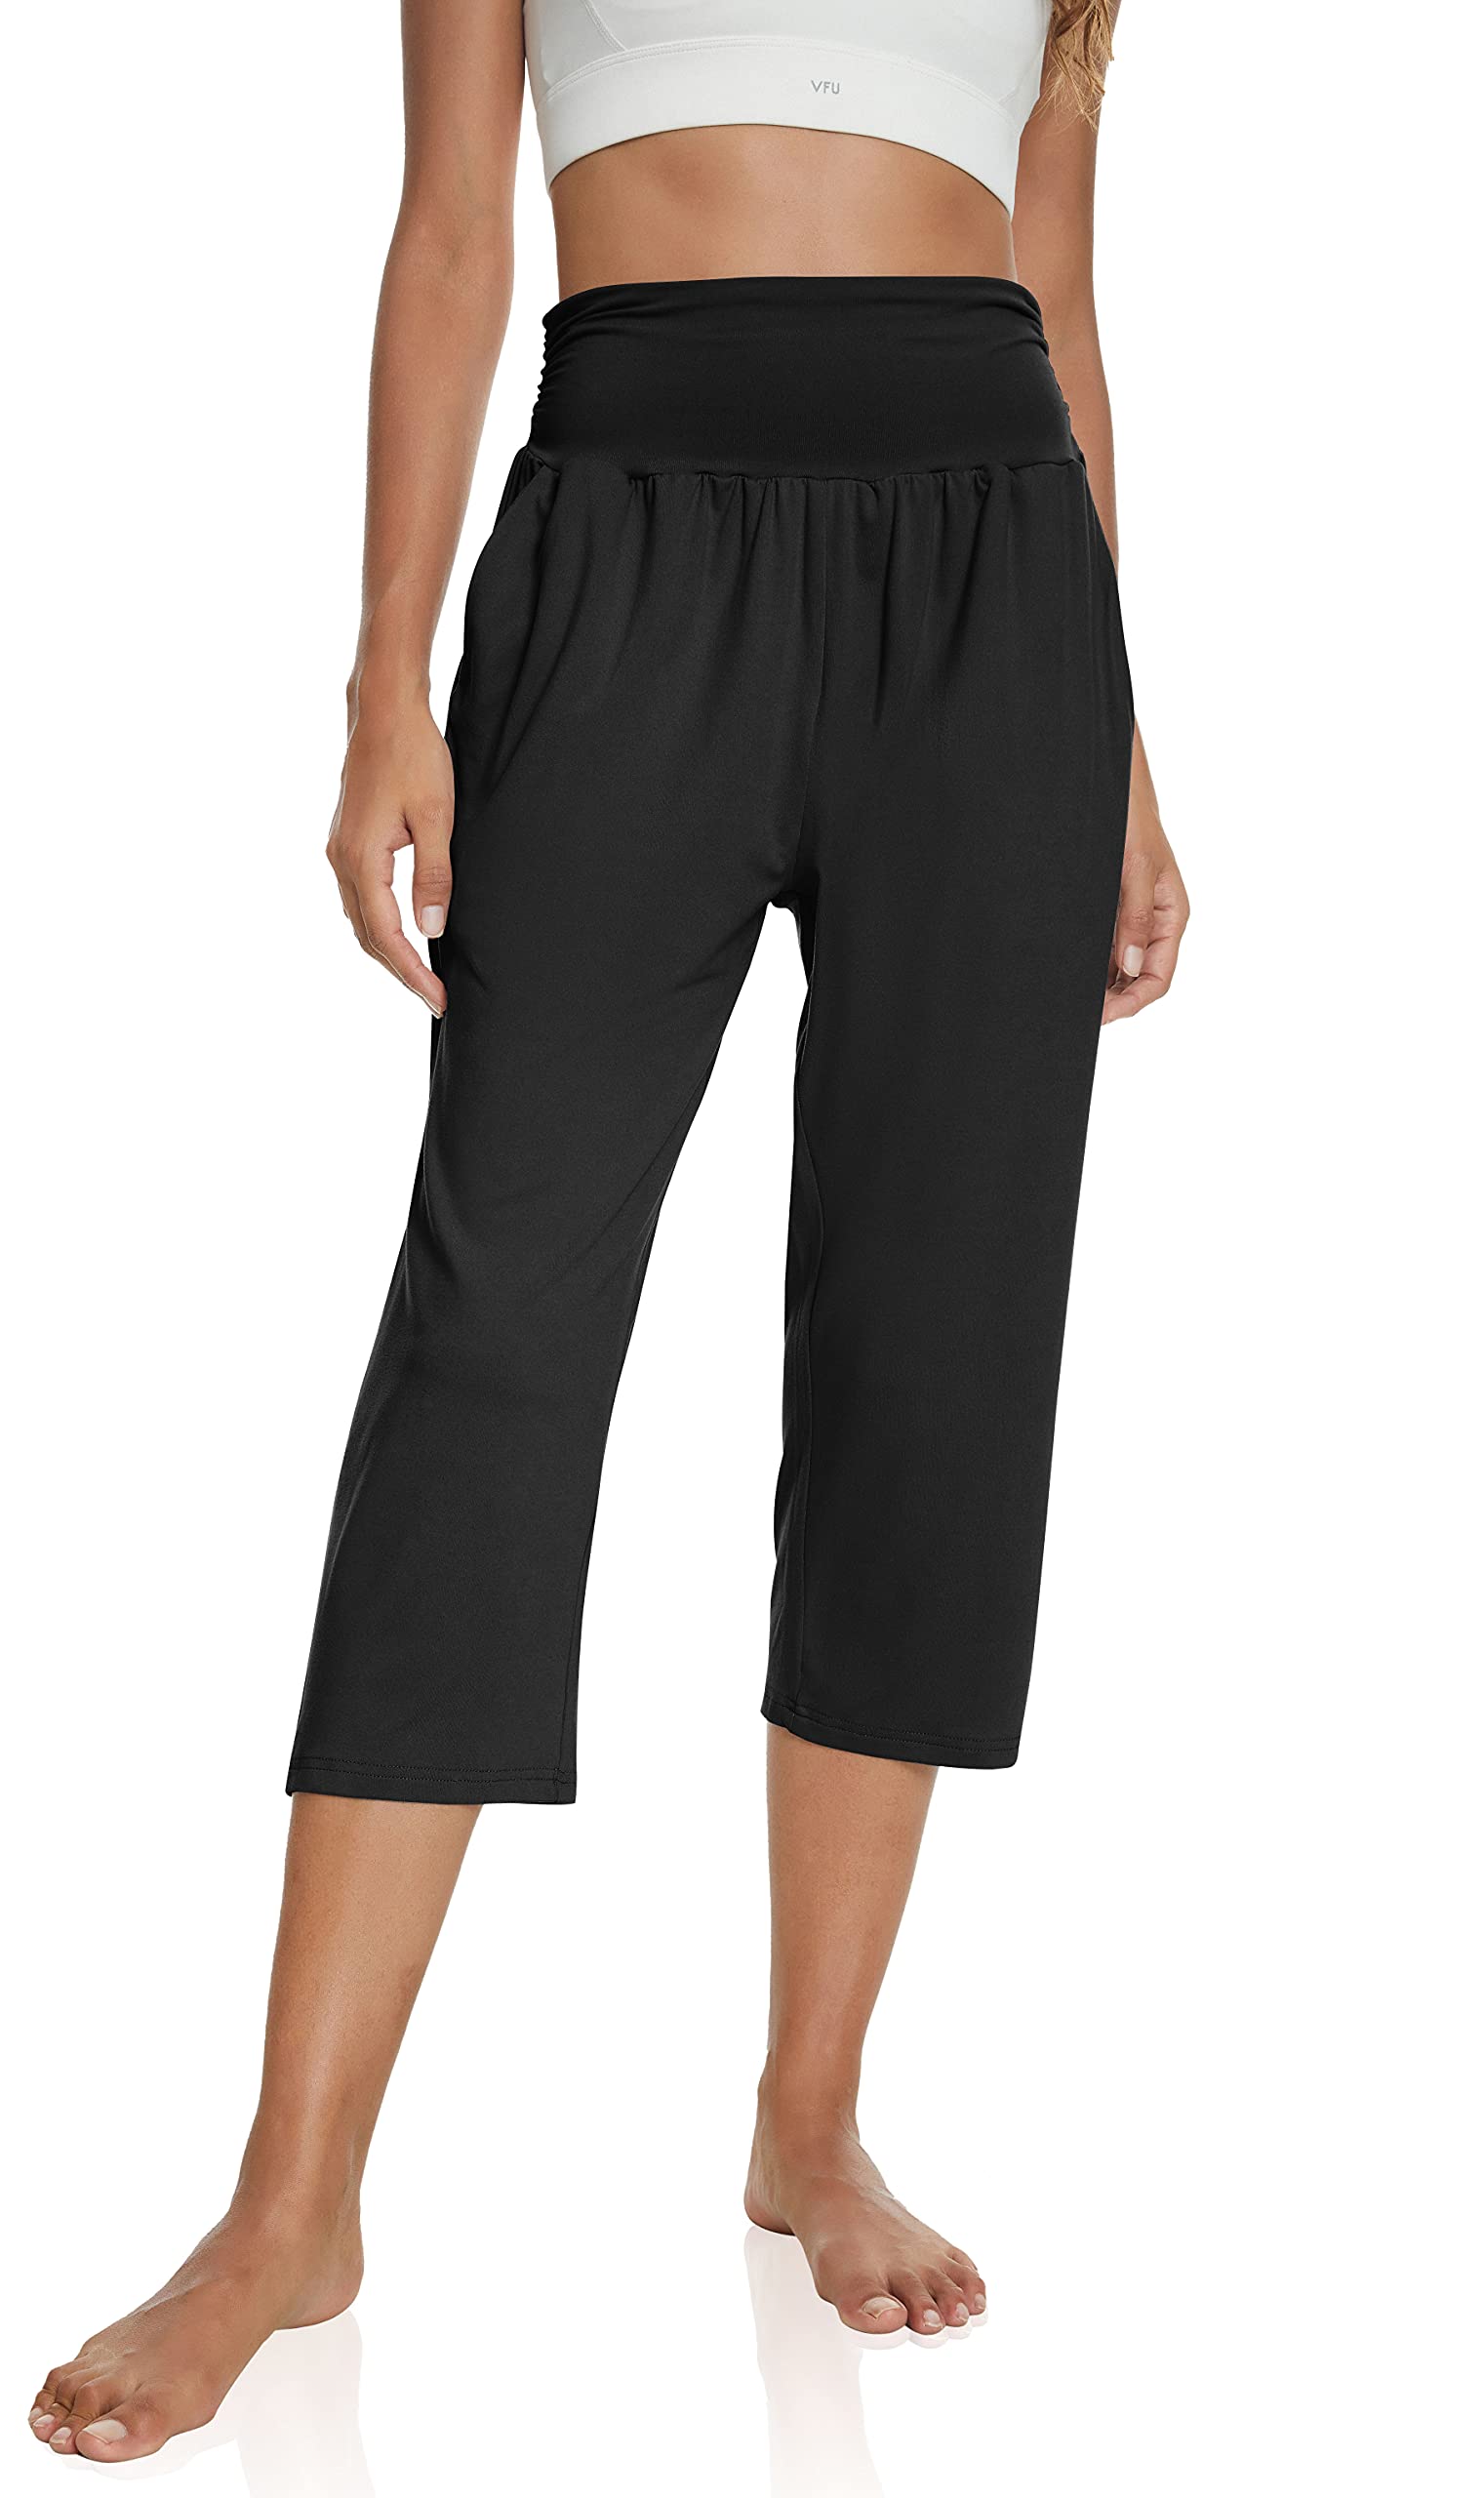 UEU Women's High Waist Capri Pants Casual Loose Fitting Yoga Pants Comfy  Lounge Workout Capris Sweatpants with Pockets Capris, Black Large